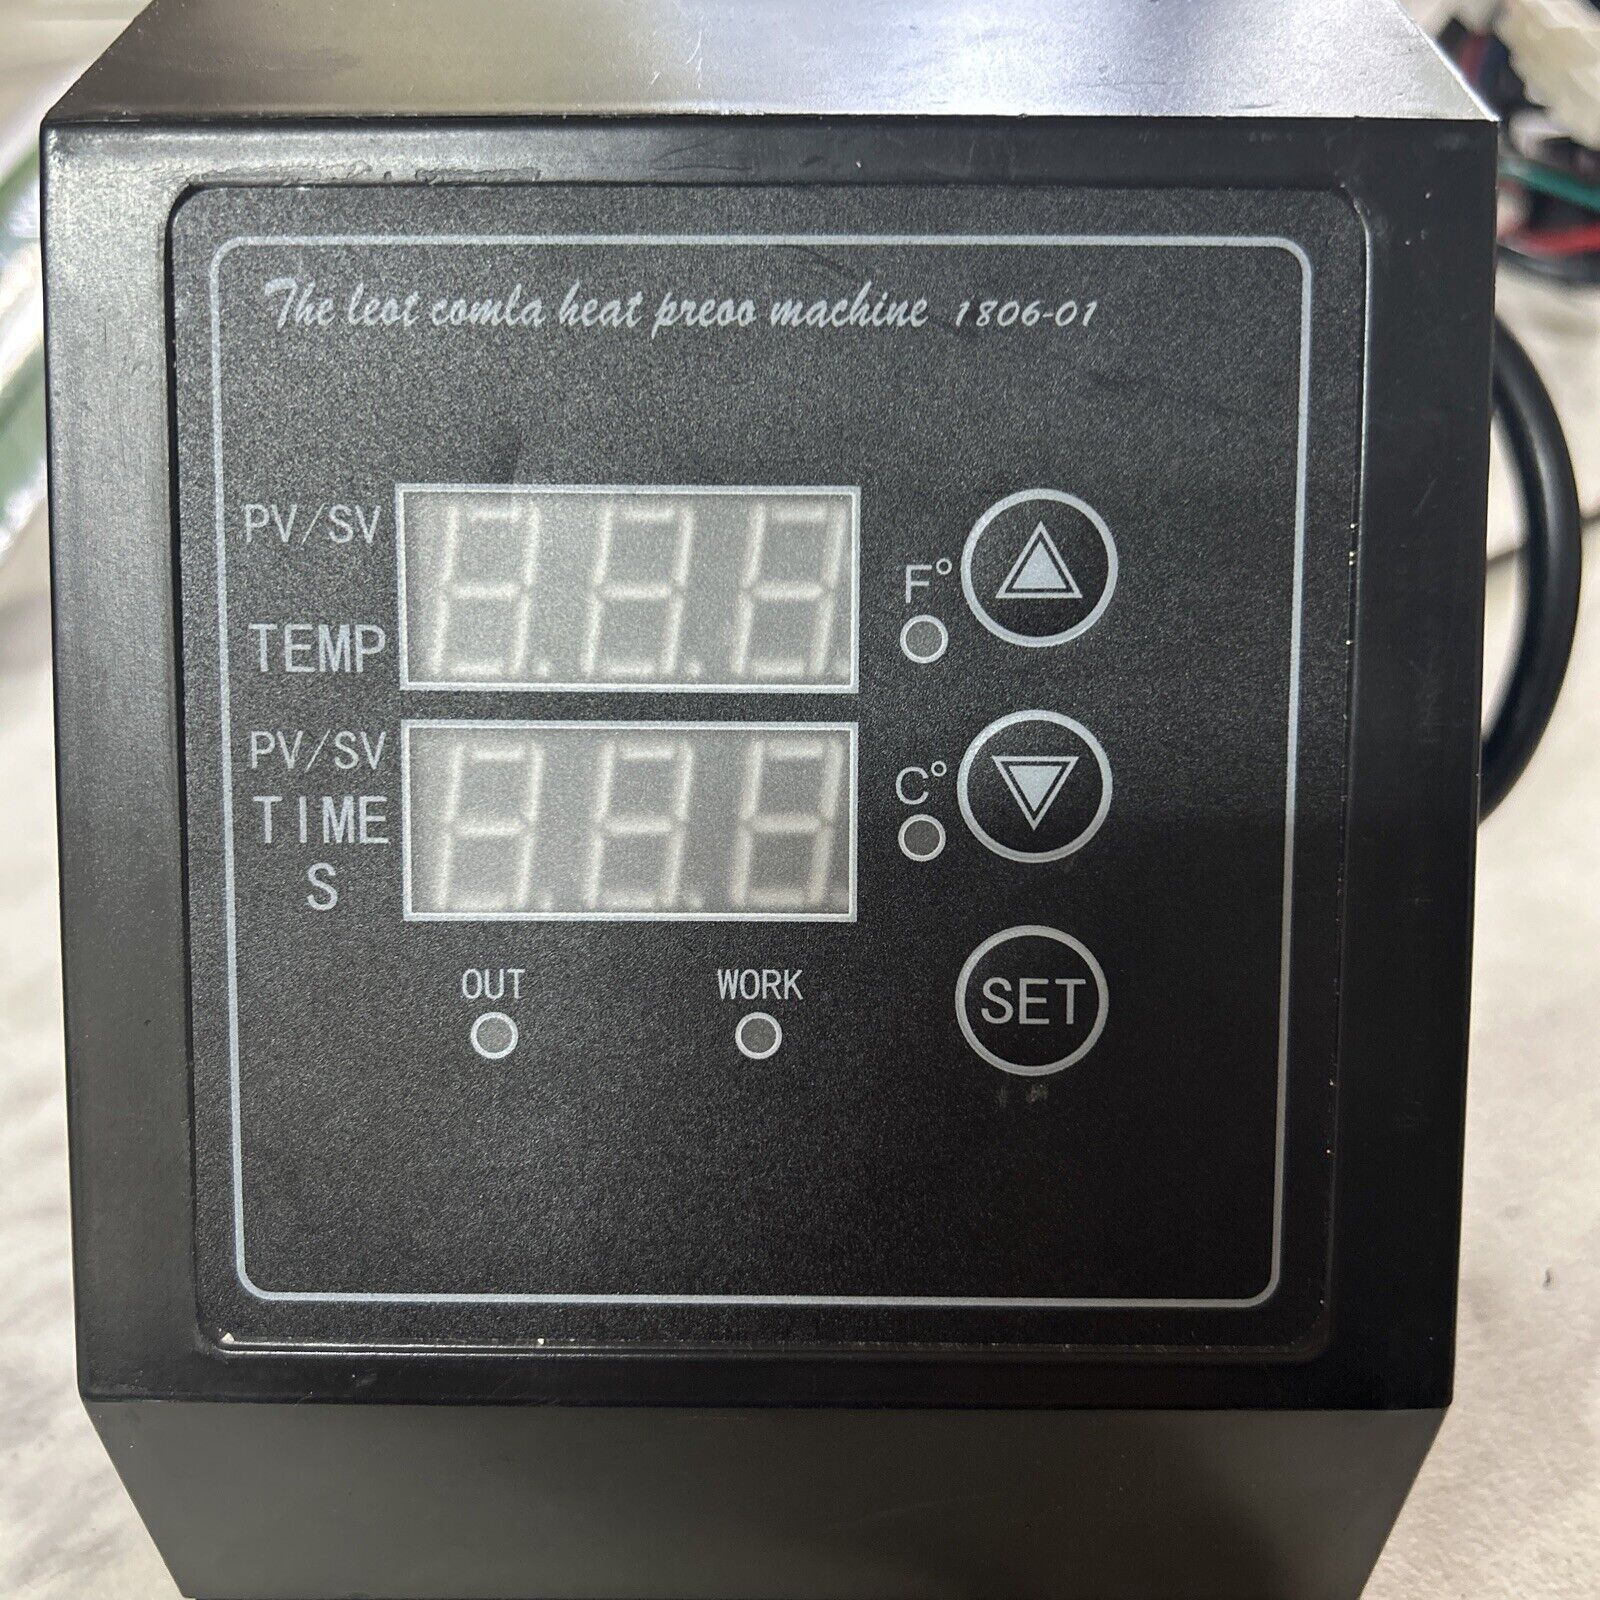 Leot Comla Heat Press Machine Digital LED Control Box T-Shirt 1806-01